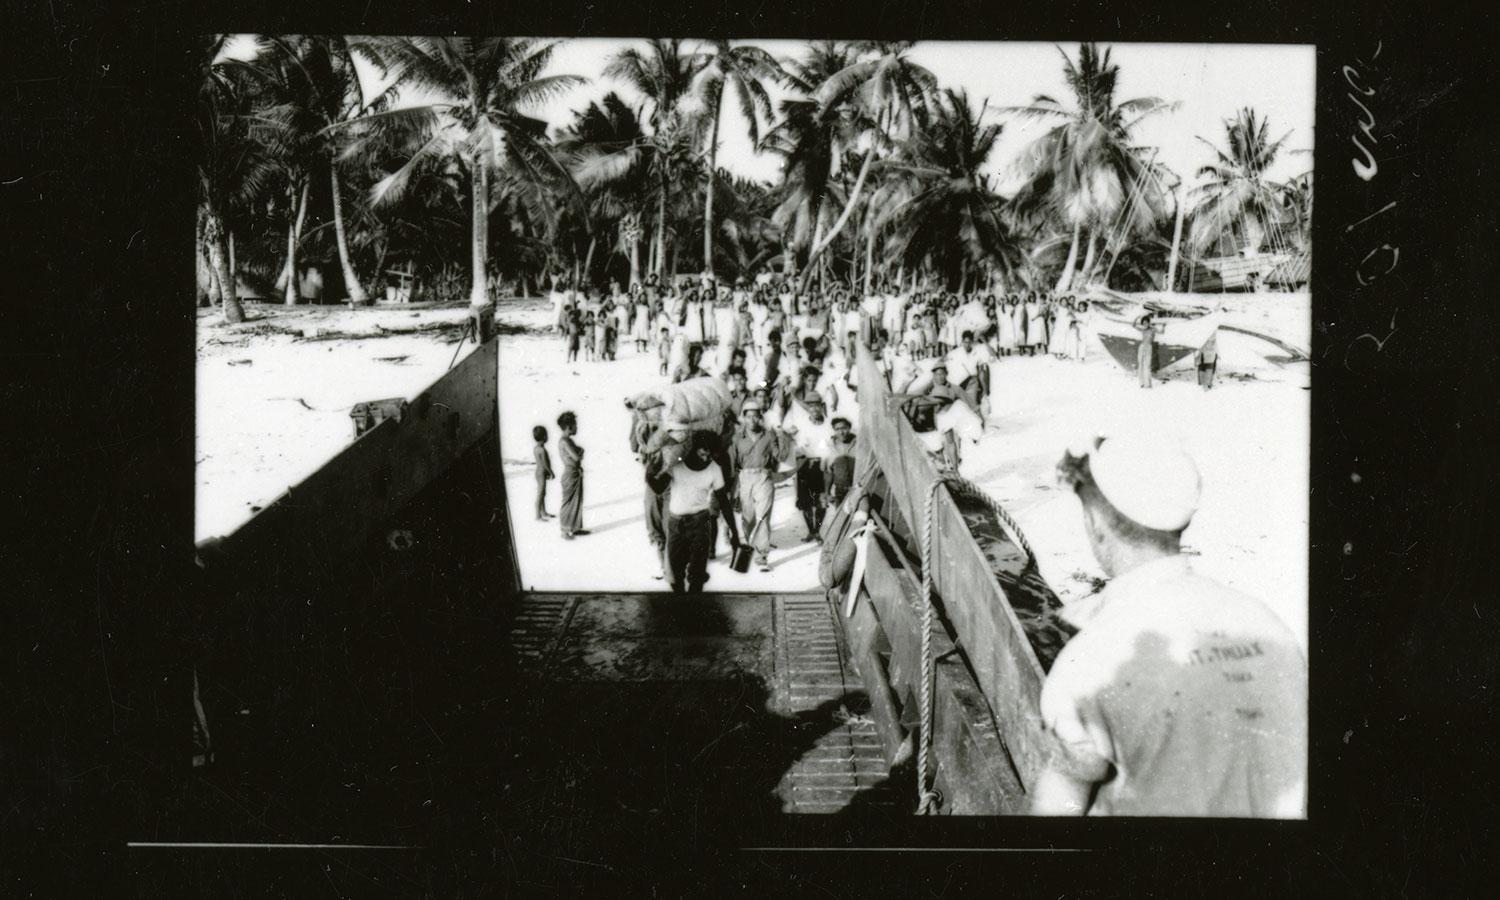 Residents of Bikini Atoll in the Marshall Islands board landing craft